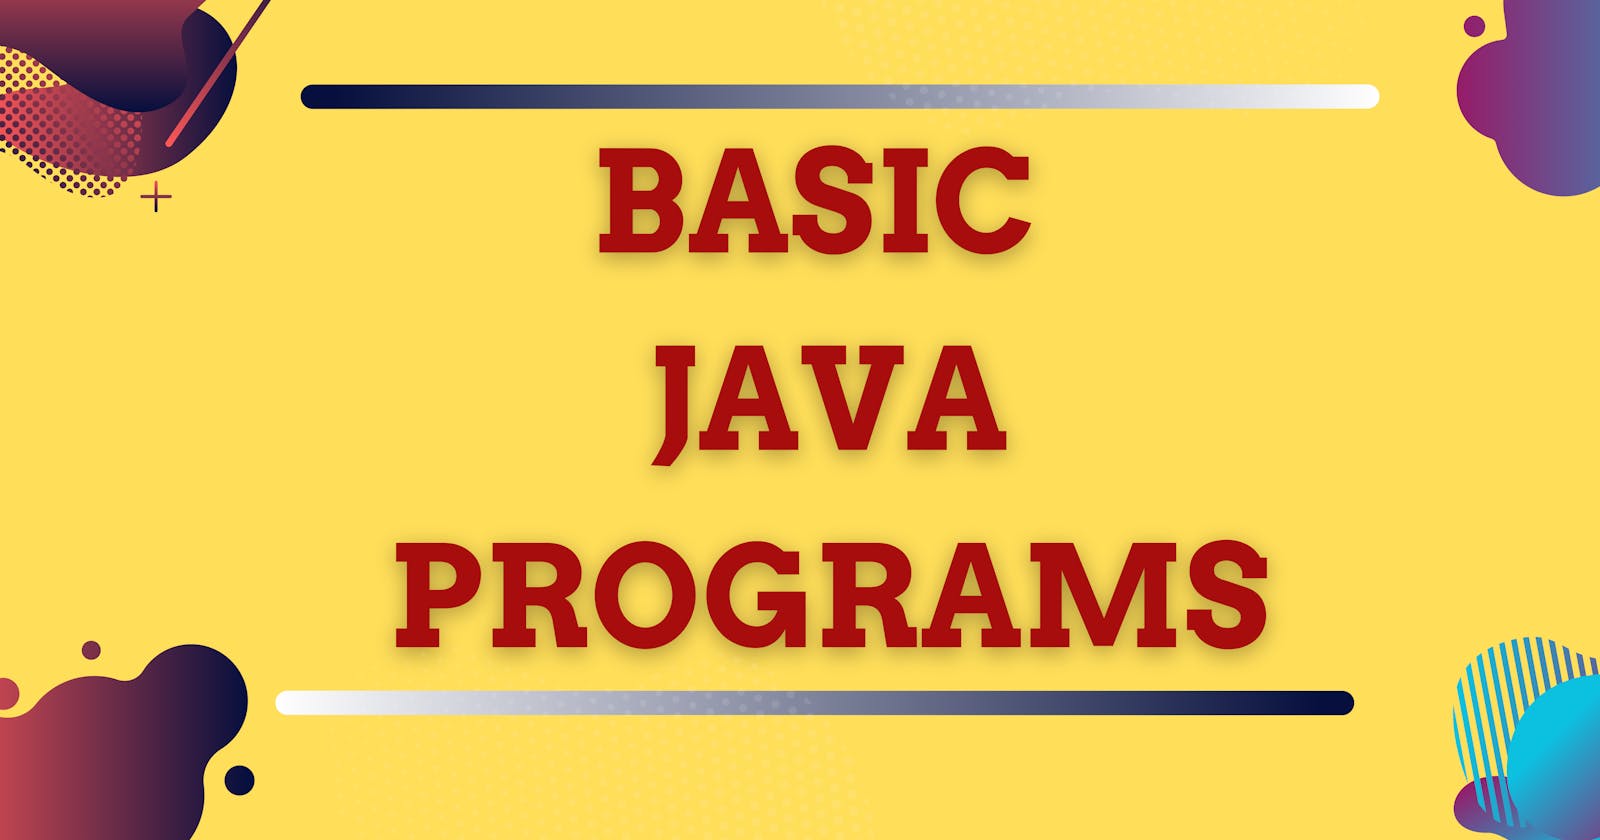 Basic Java Programs